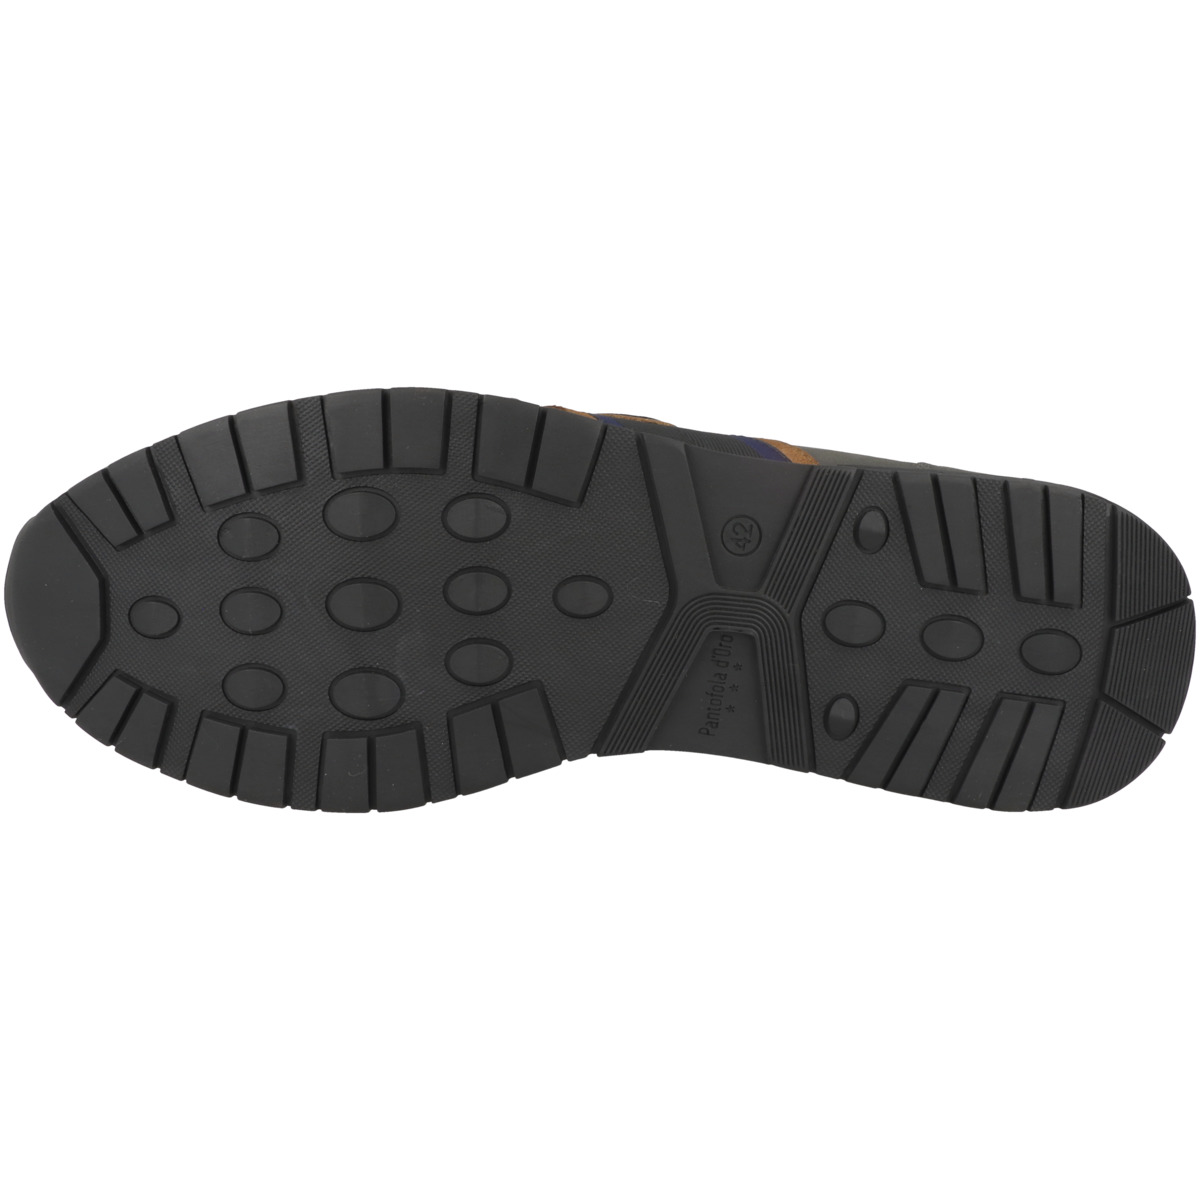 Pantofola d Oro Sangano Uomo Low Sneaker grau